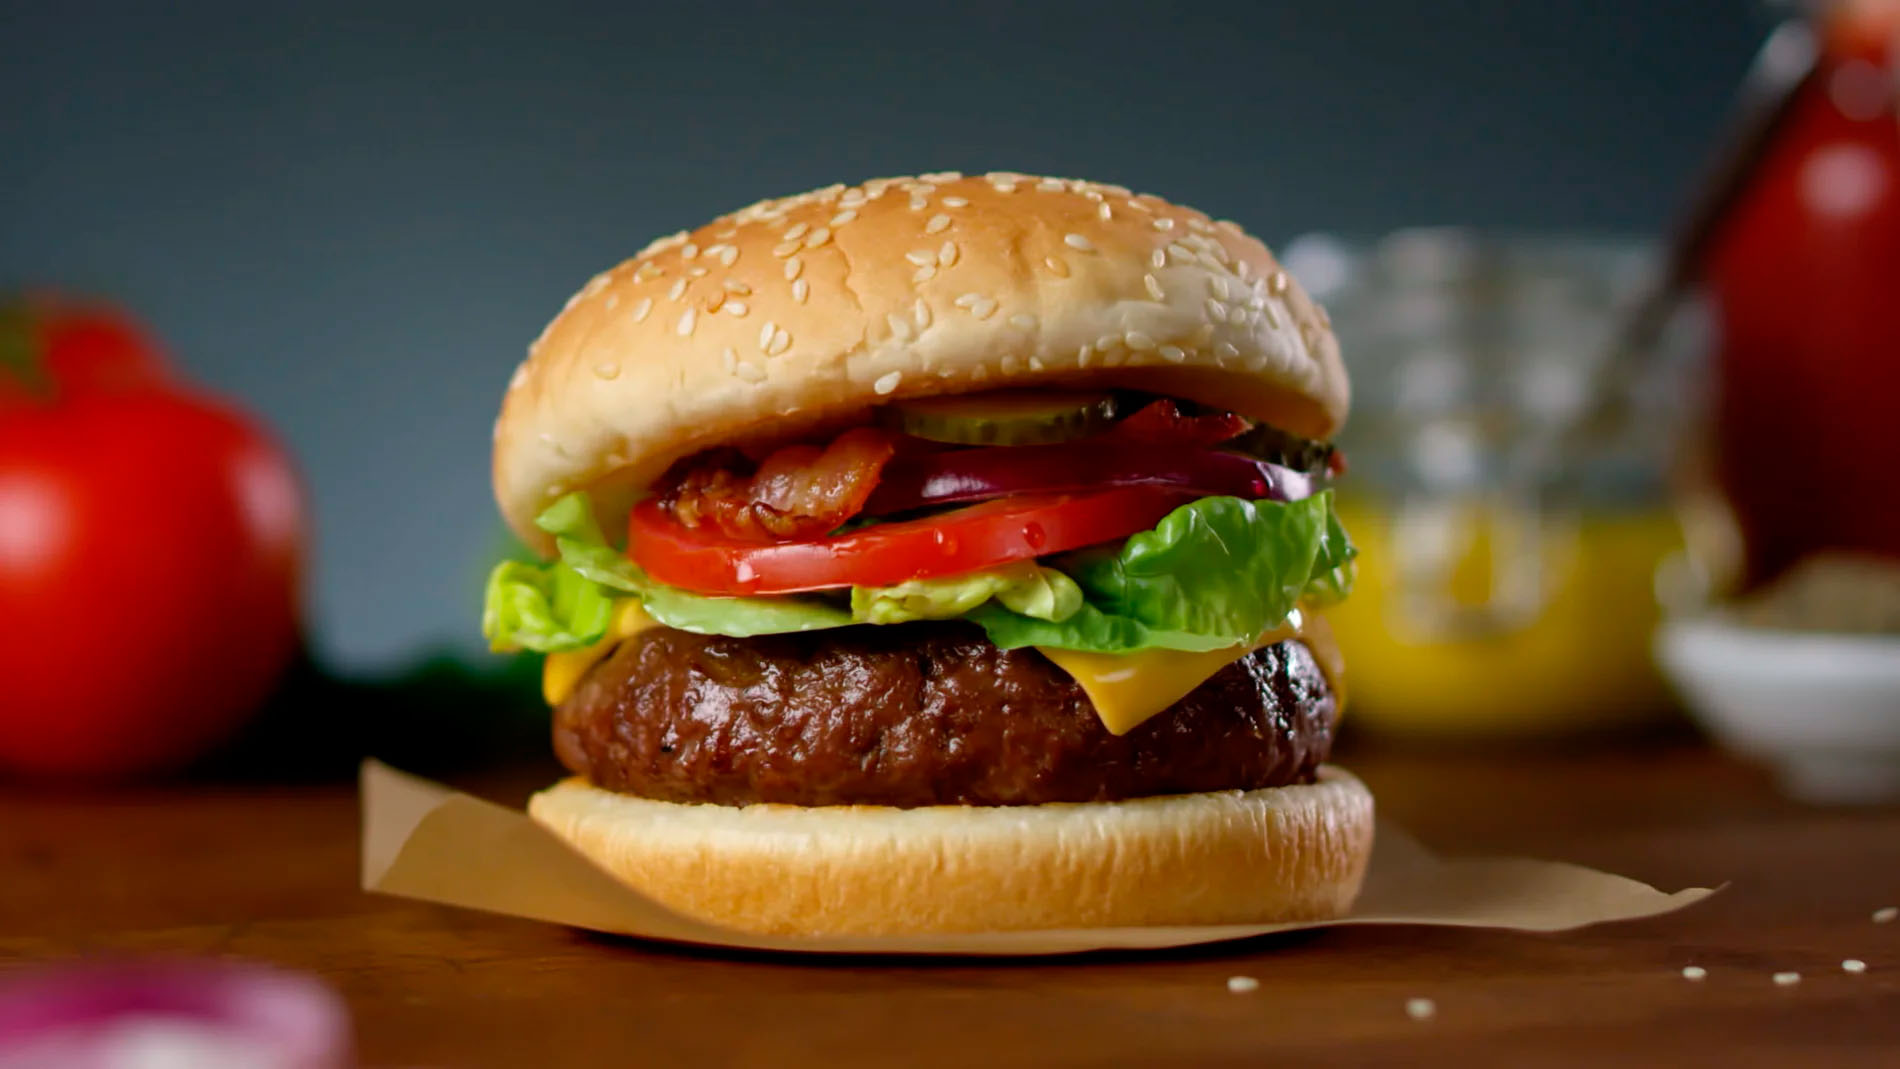 Advertising Food Film of Burger